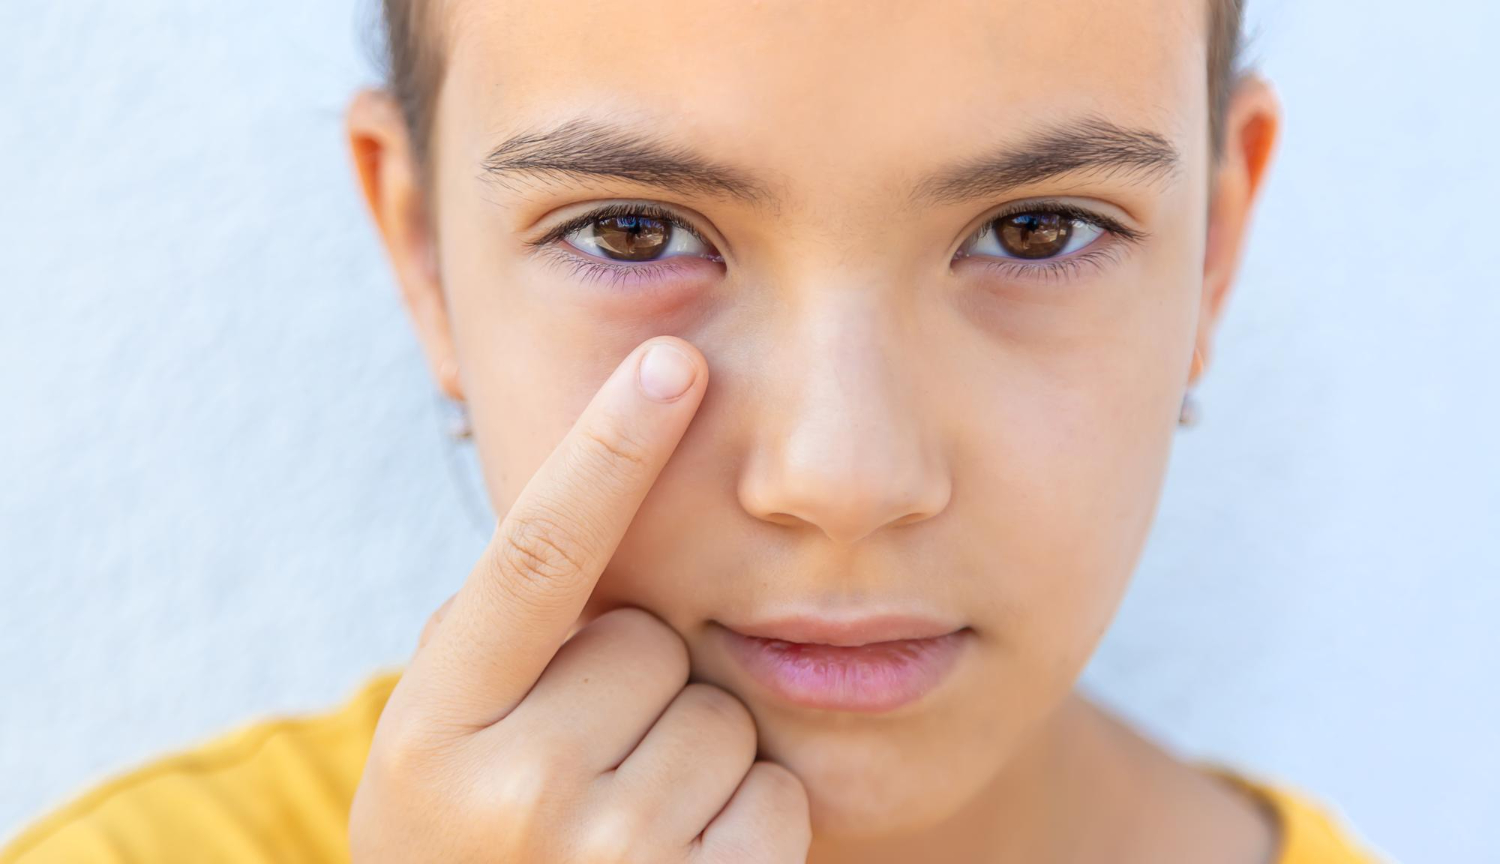 Bug Bite On Eyelid: Symptoms & Management